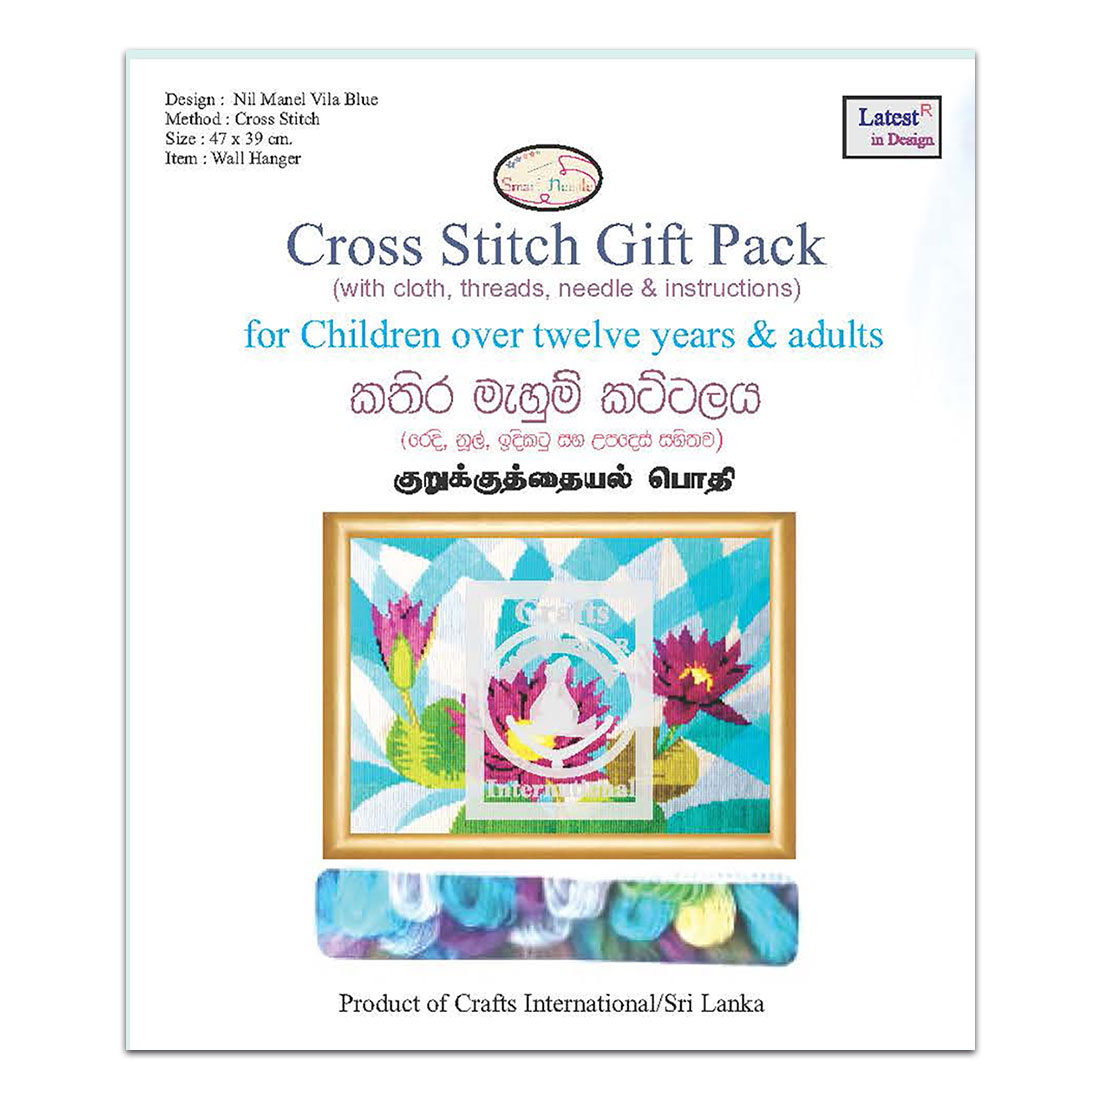 Cross Stitch Gift Pack - Nil Manel Vila Blue